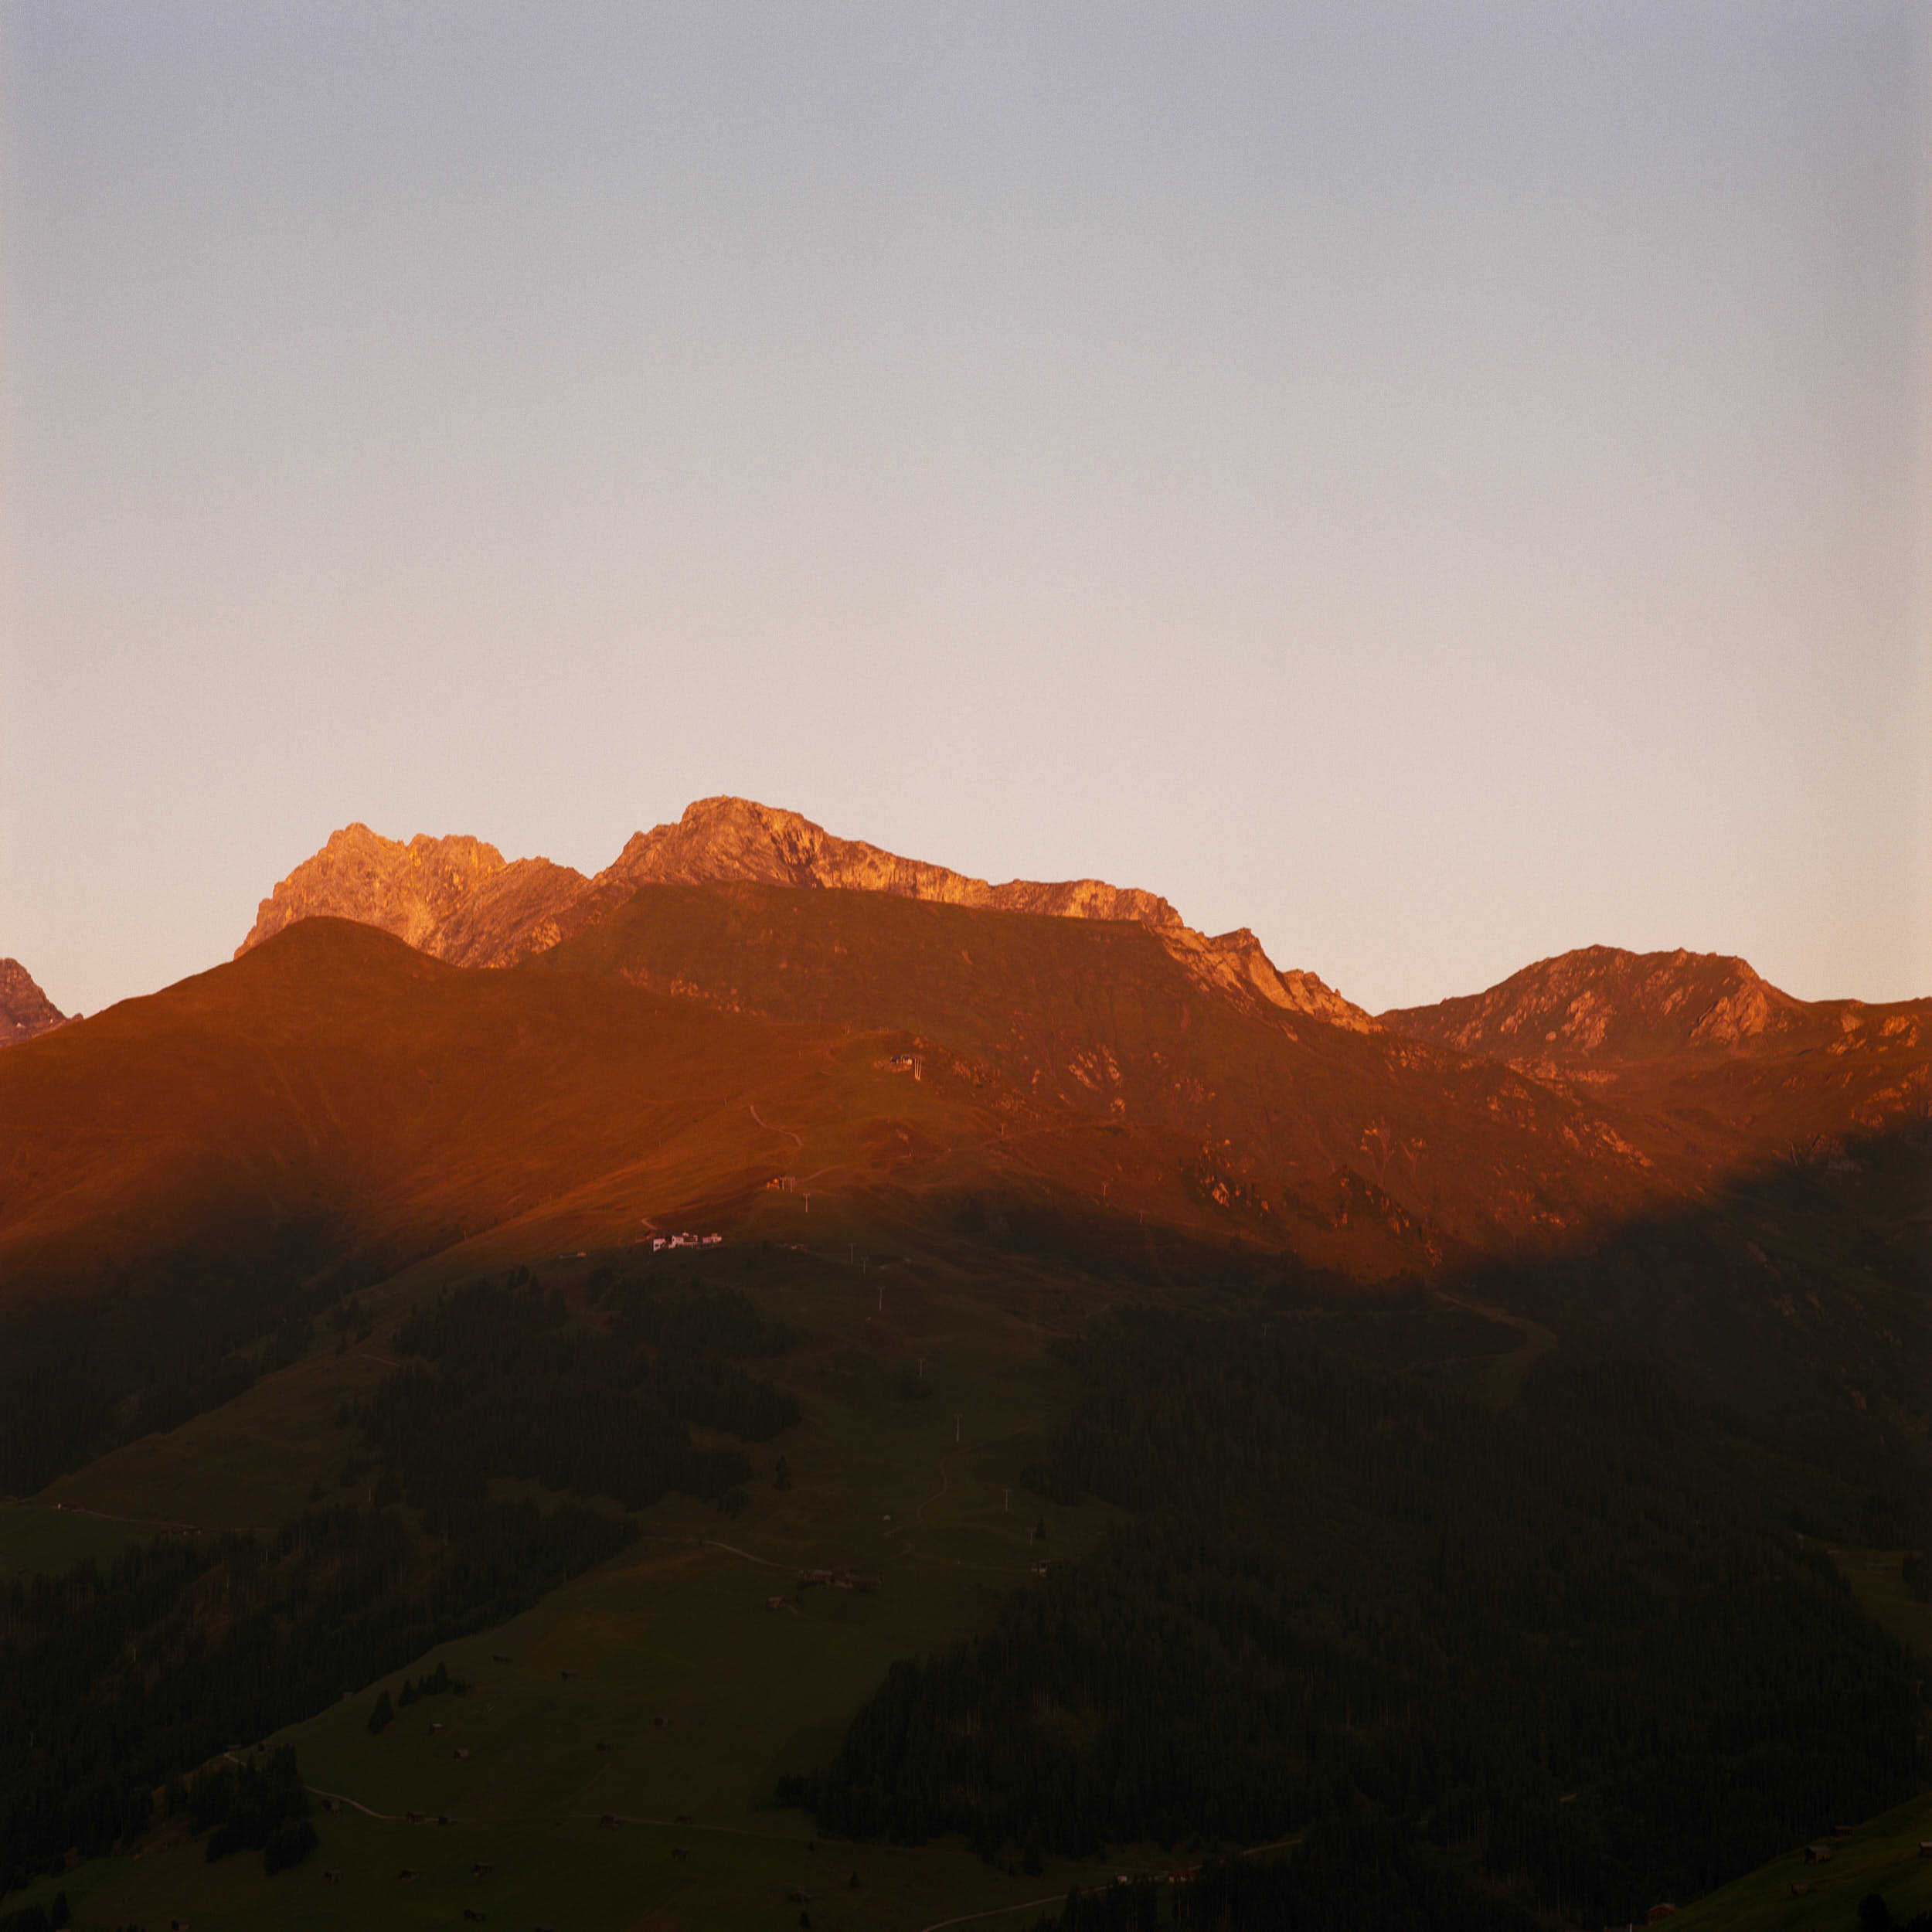 First sunlight hitting the top of alpine peaks. Shot on medium format color film.